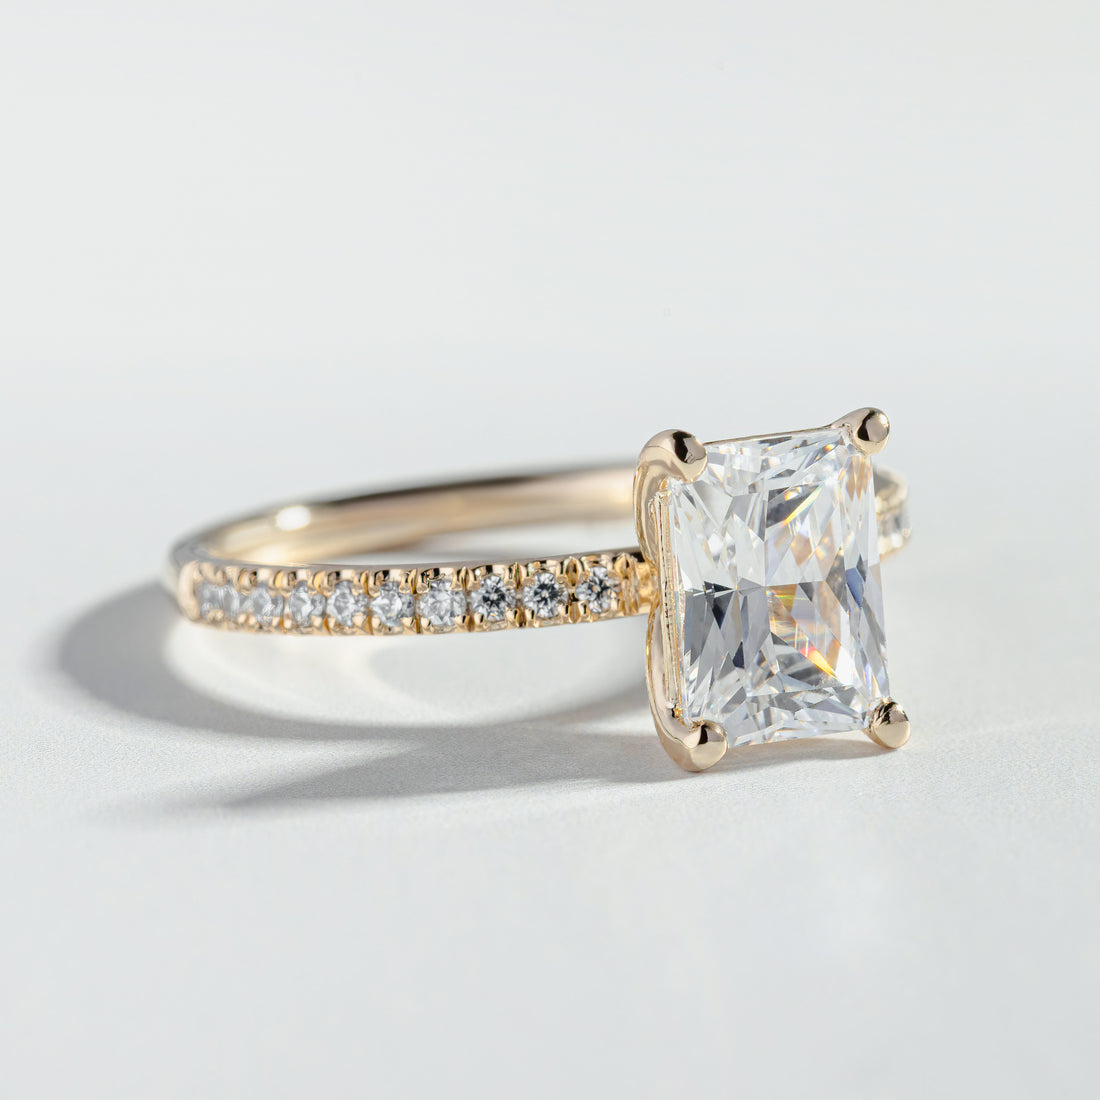 The Radiant Cut Pavé Diamond Ring